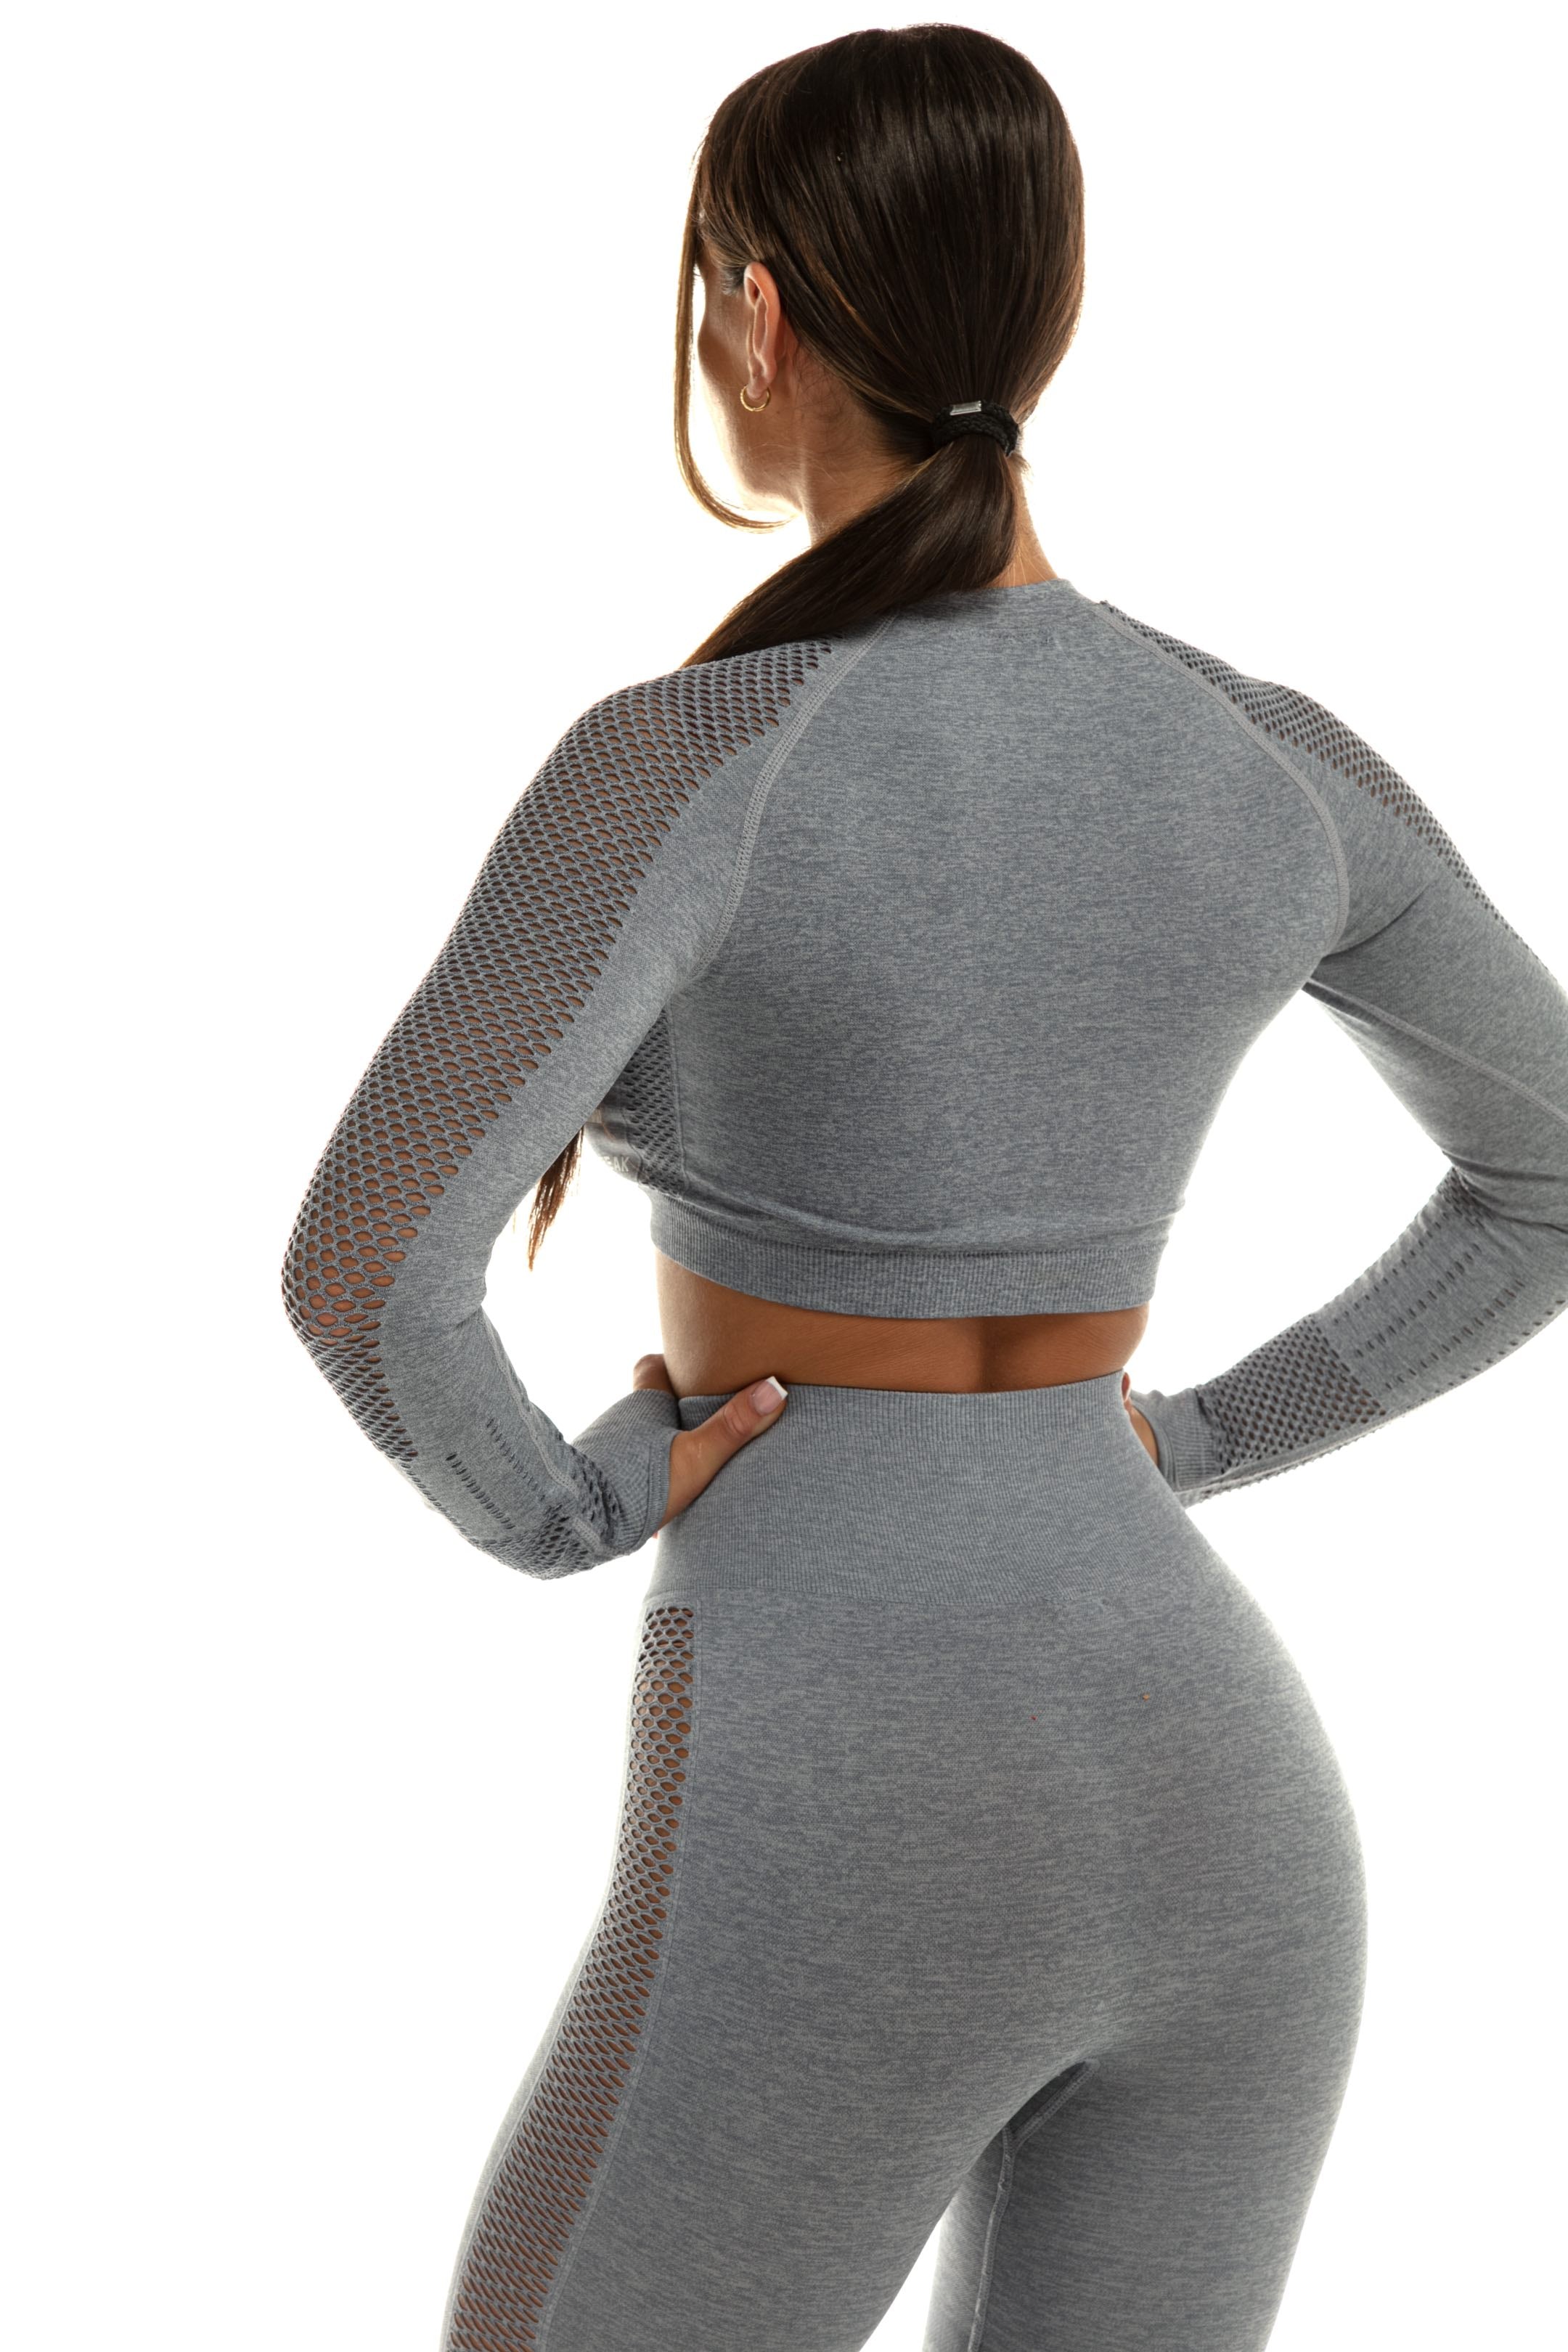 GymFreak Womens Yoga Set - Grey